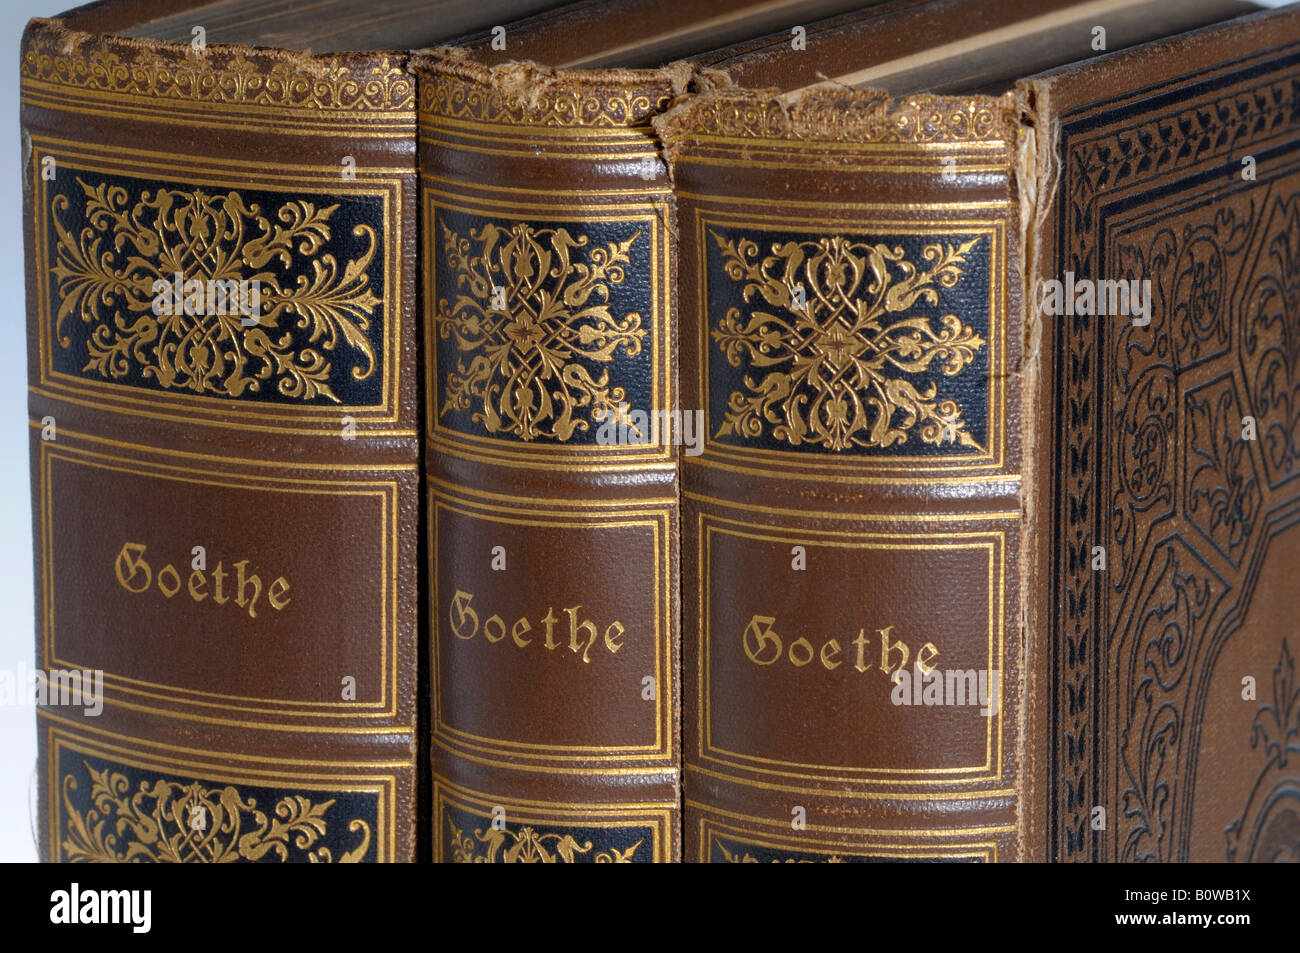 Edición de libros clásicos, Goethe Foto de stock